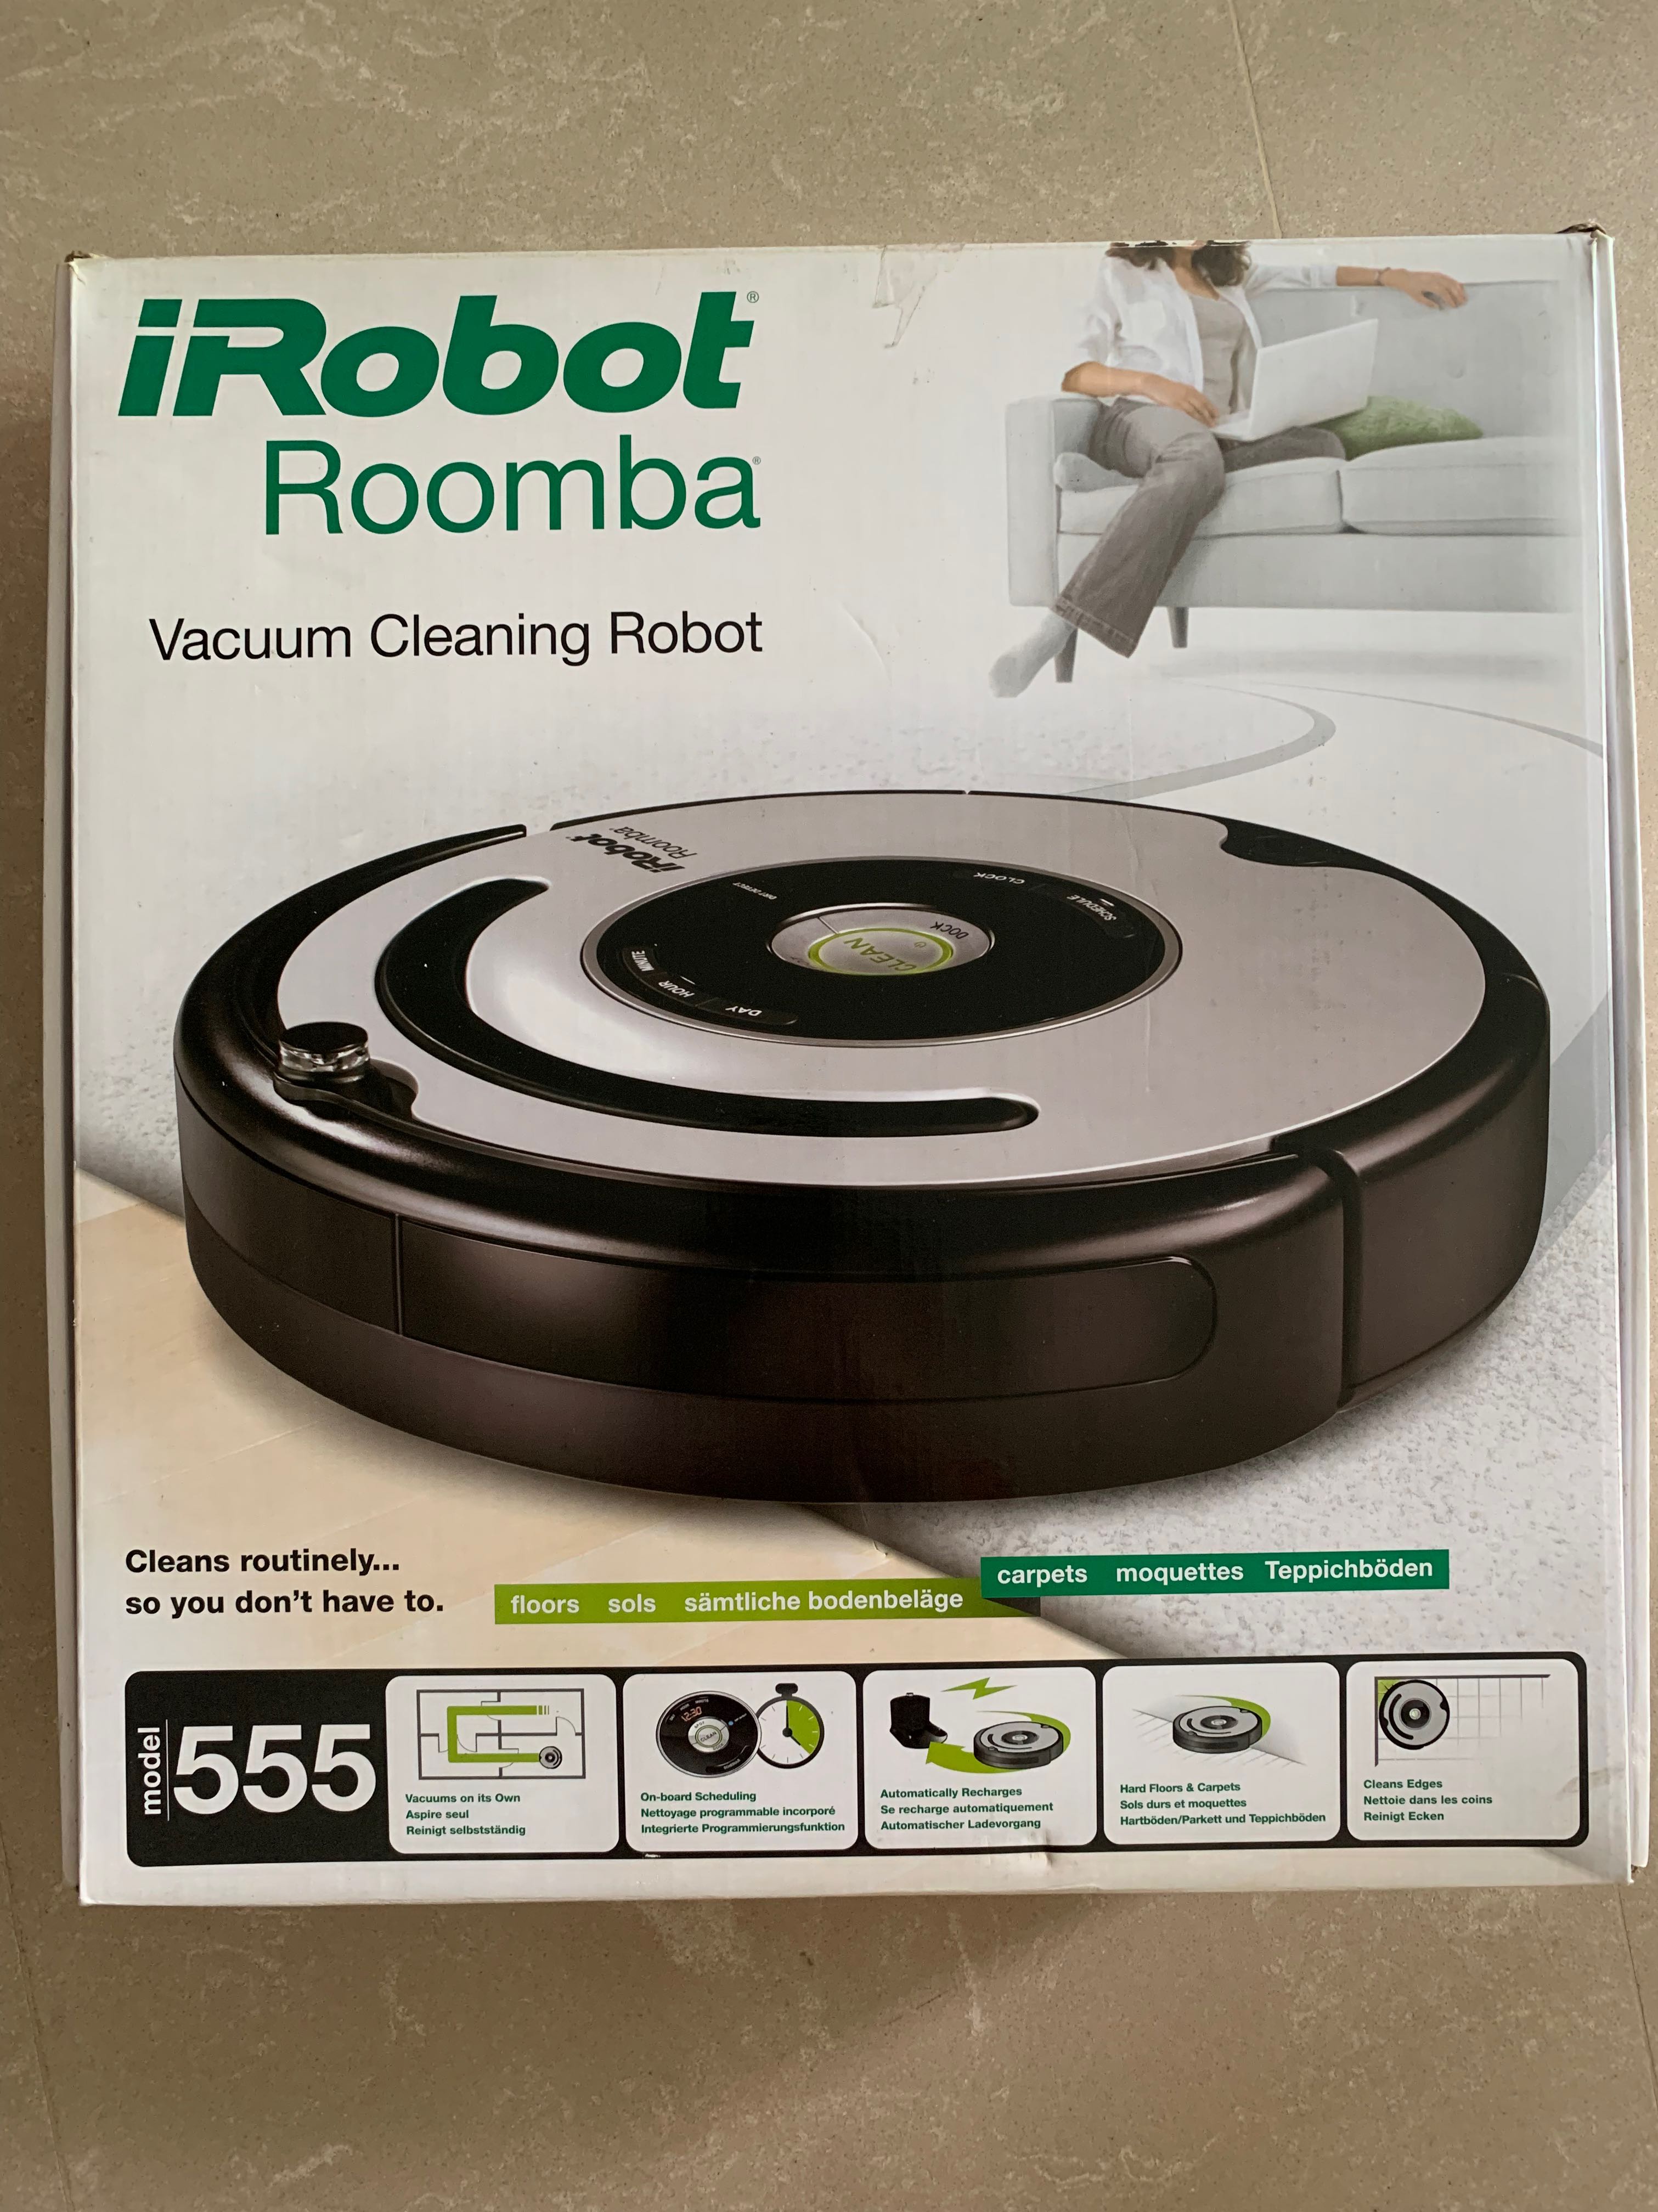 dannelse Port Relativitetsteori iRobot Roomba Vacuum Cleaning Robot model 555, Furniture & Home Living,  Cleaning & Homecare Supplies, Cleaning Tools & Supplies on Carousell